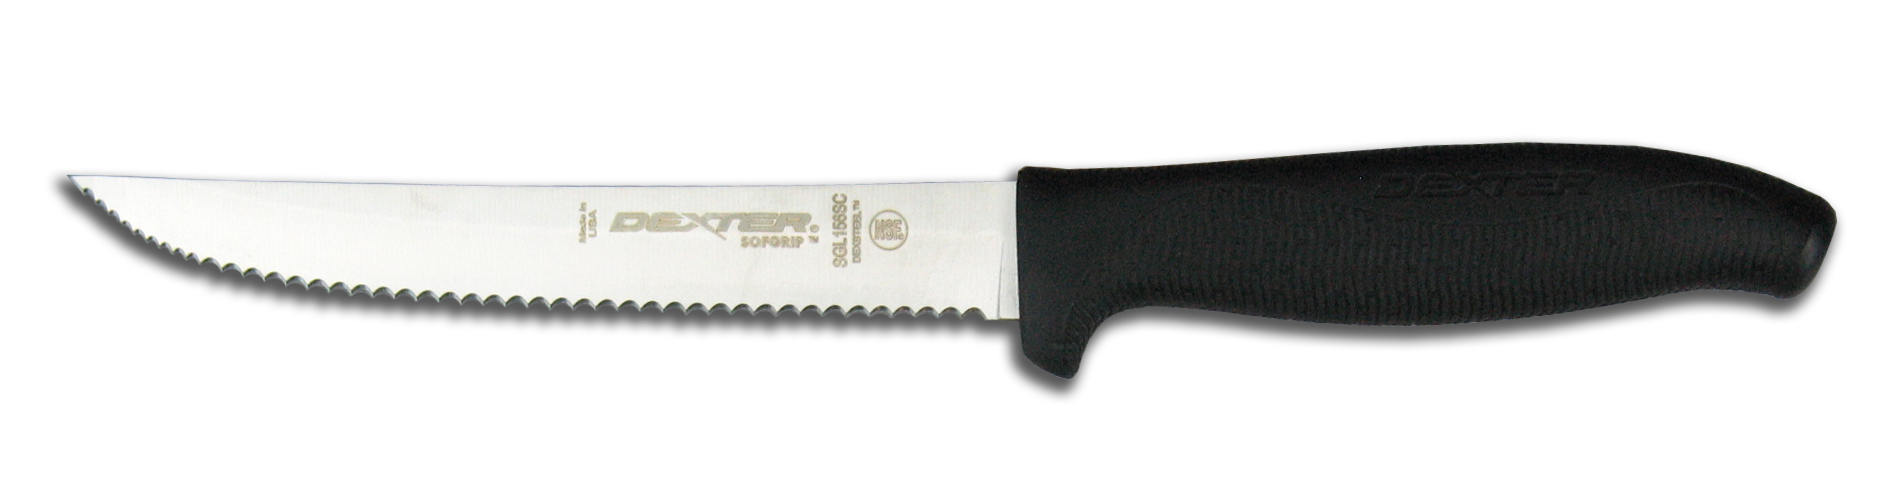 cut clipart knife